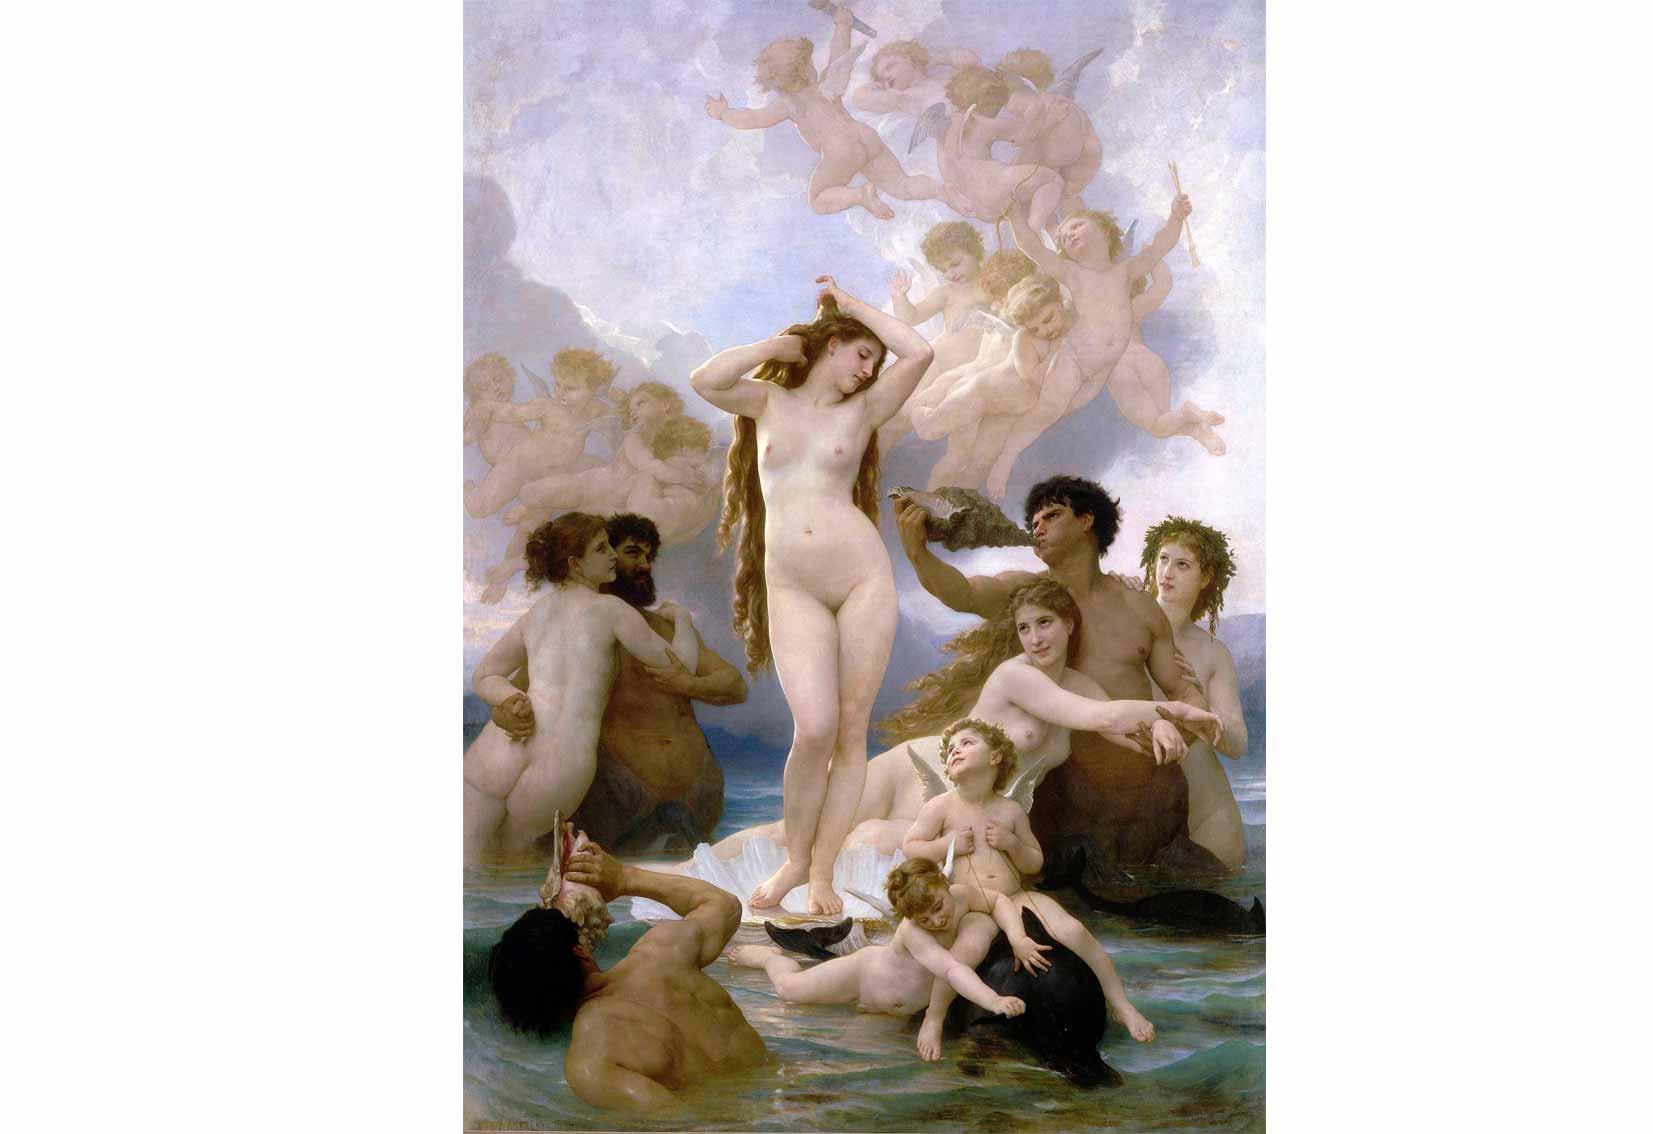 William-Adolphe Bouguereau, The Birth of Venus, 1879.